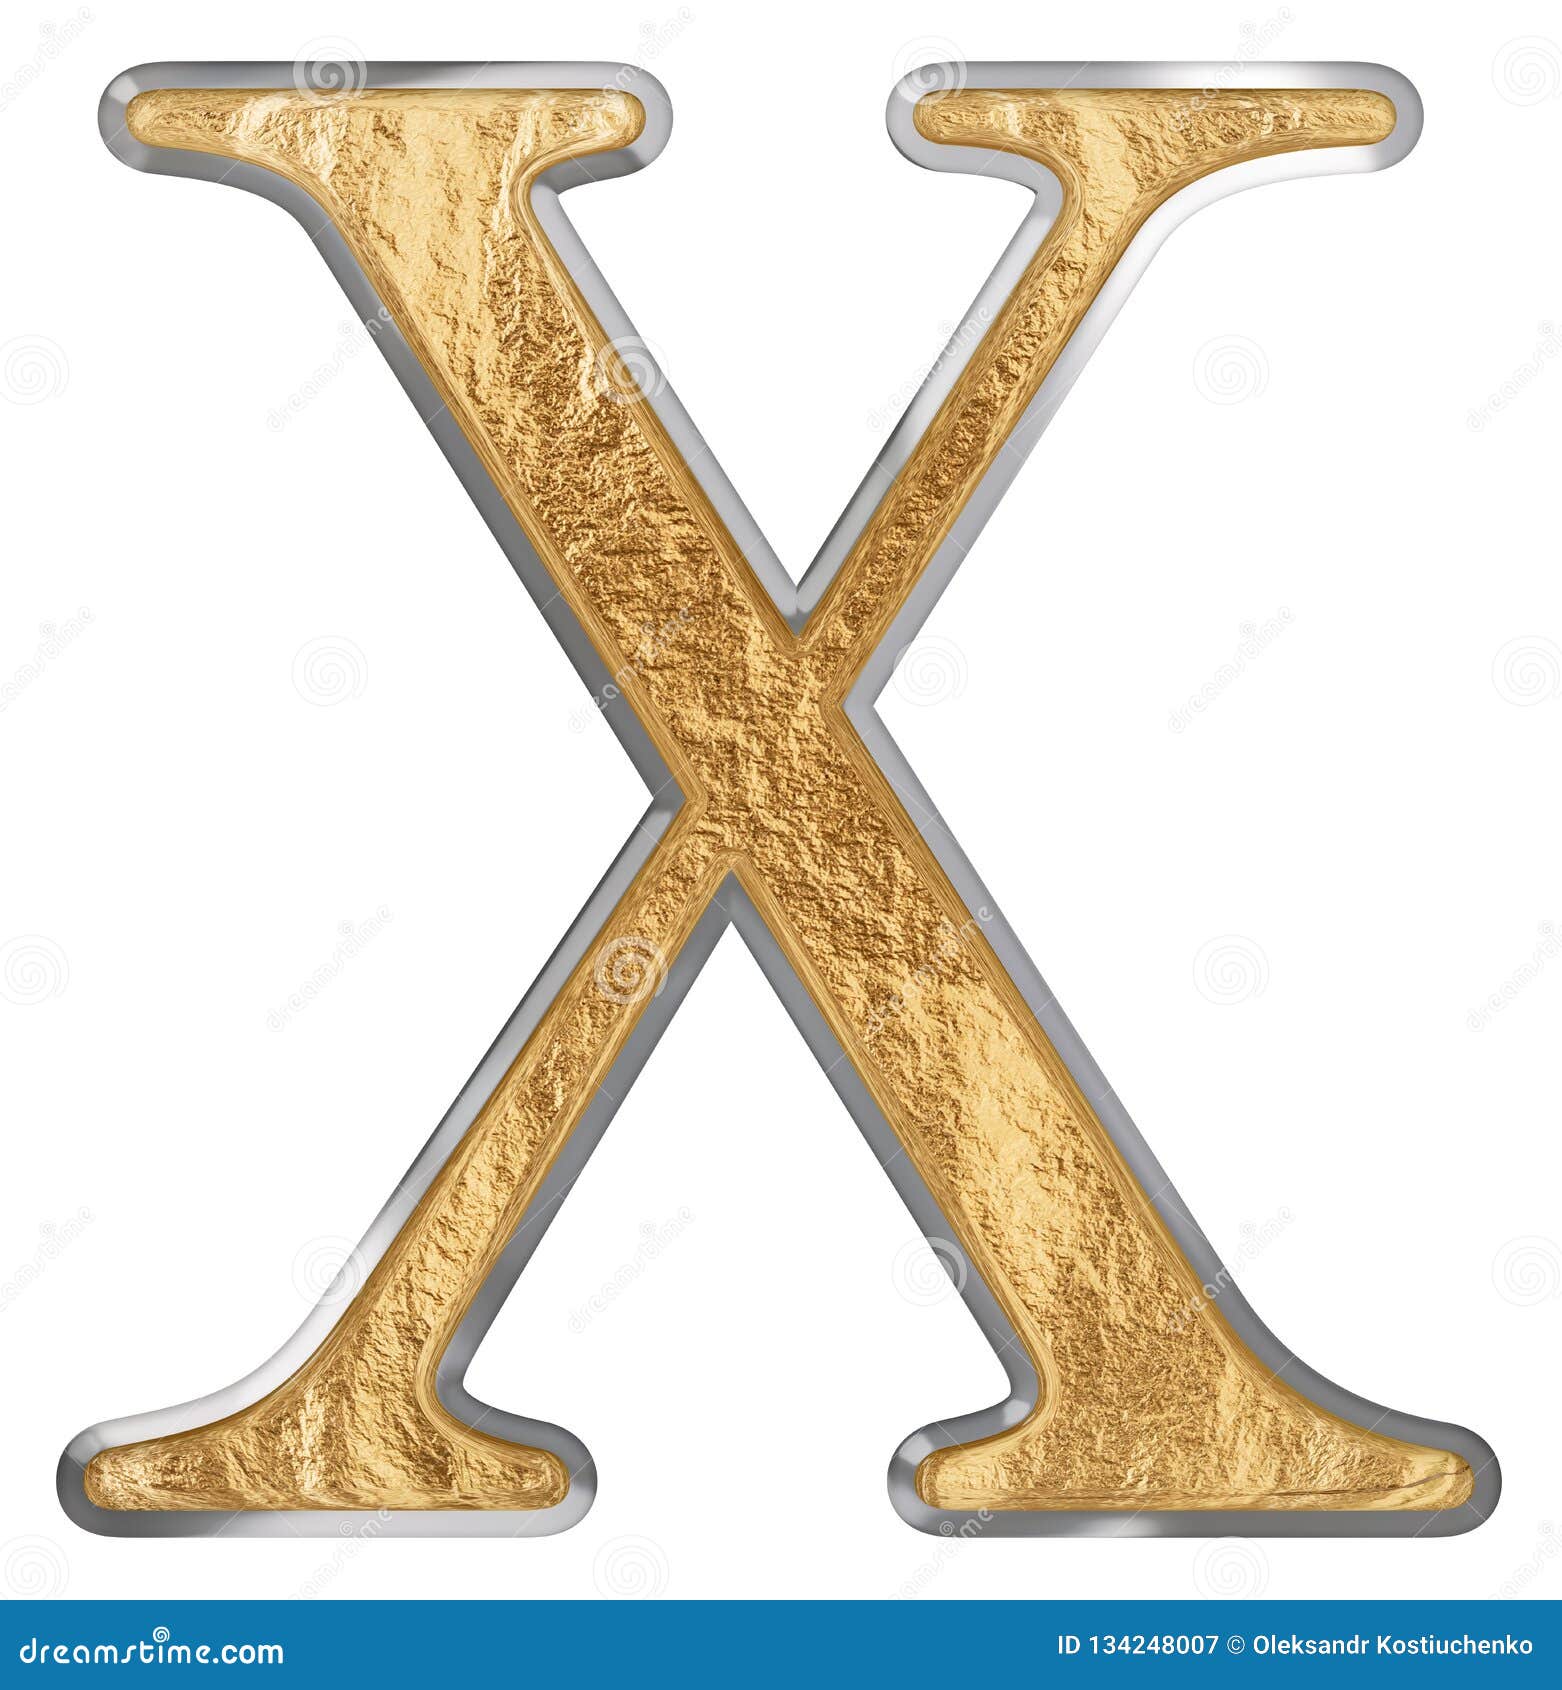 Сообщество по латыни 10 букв. Буква x в круге. Заглавная буква x. X буквы золото. Буква x латинская, золото 750.